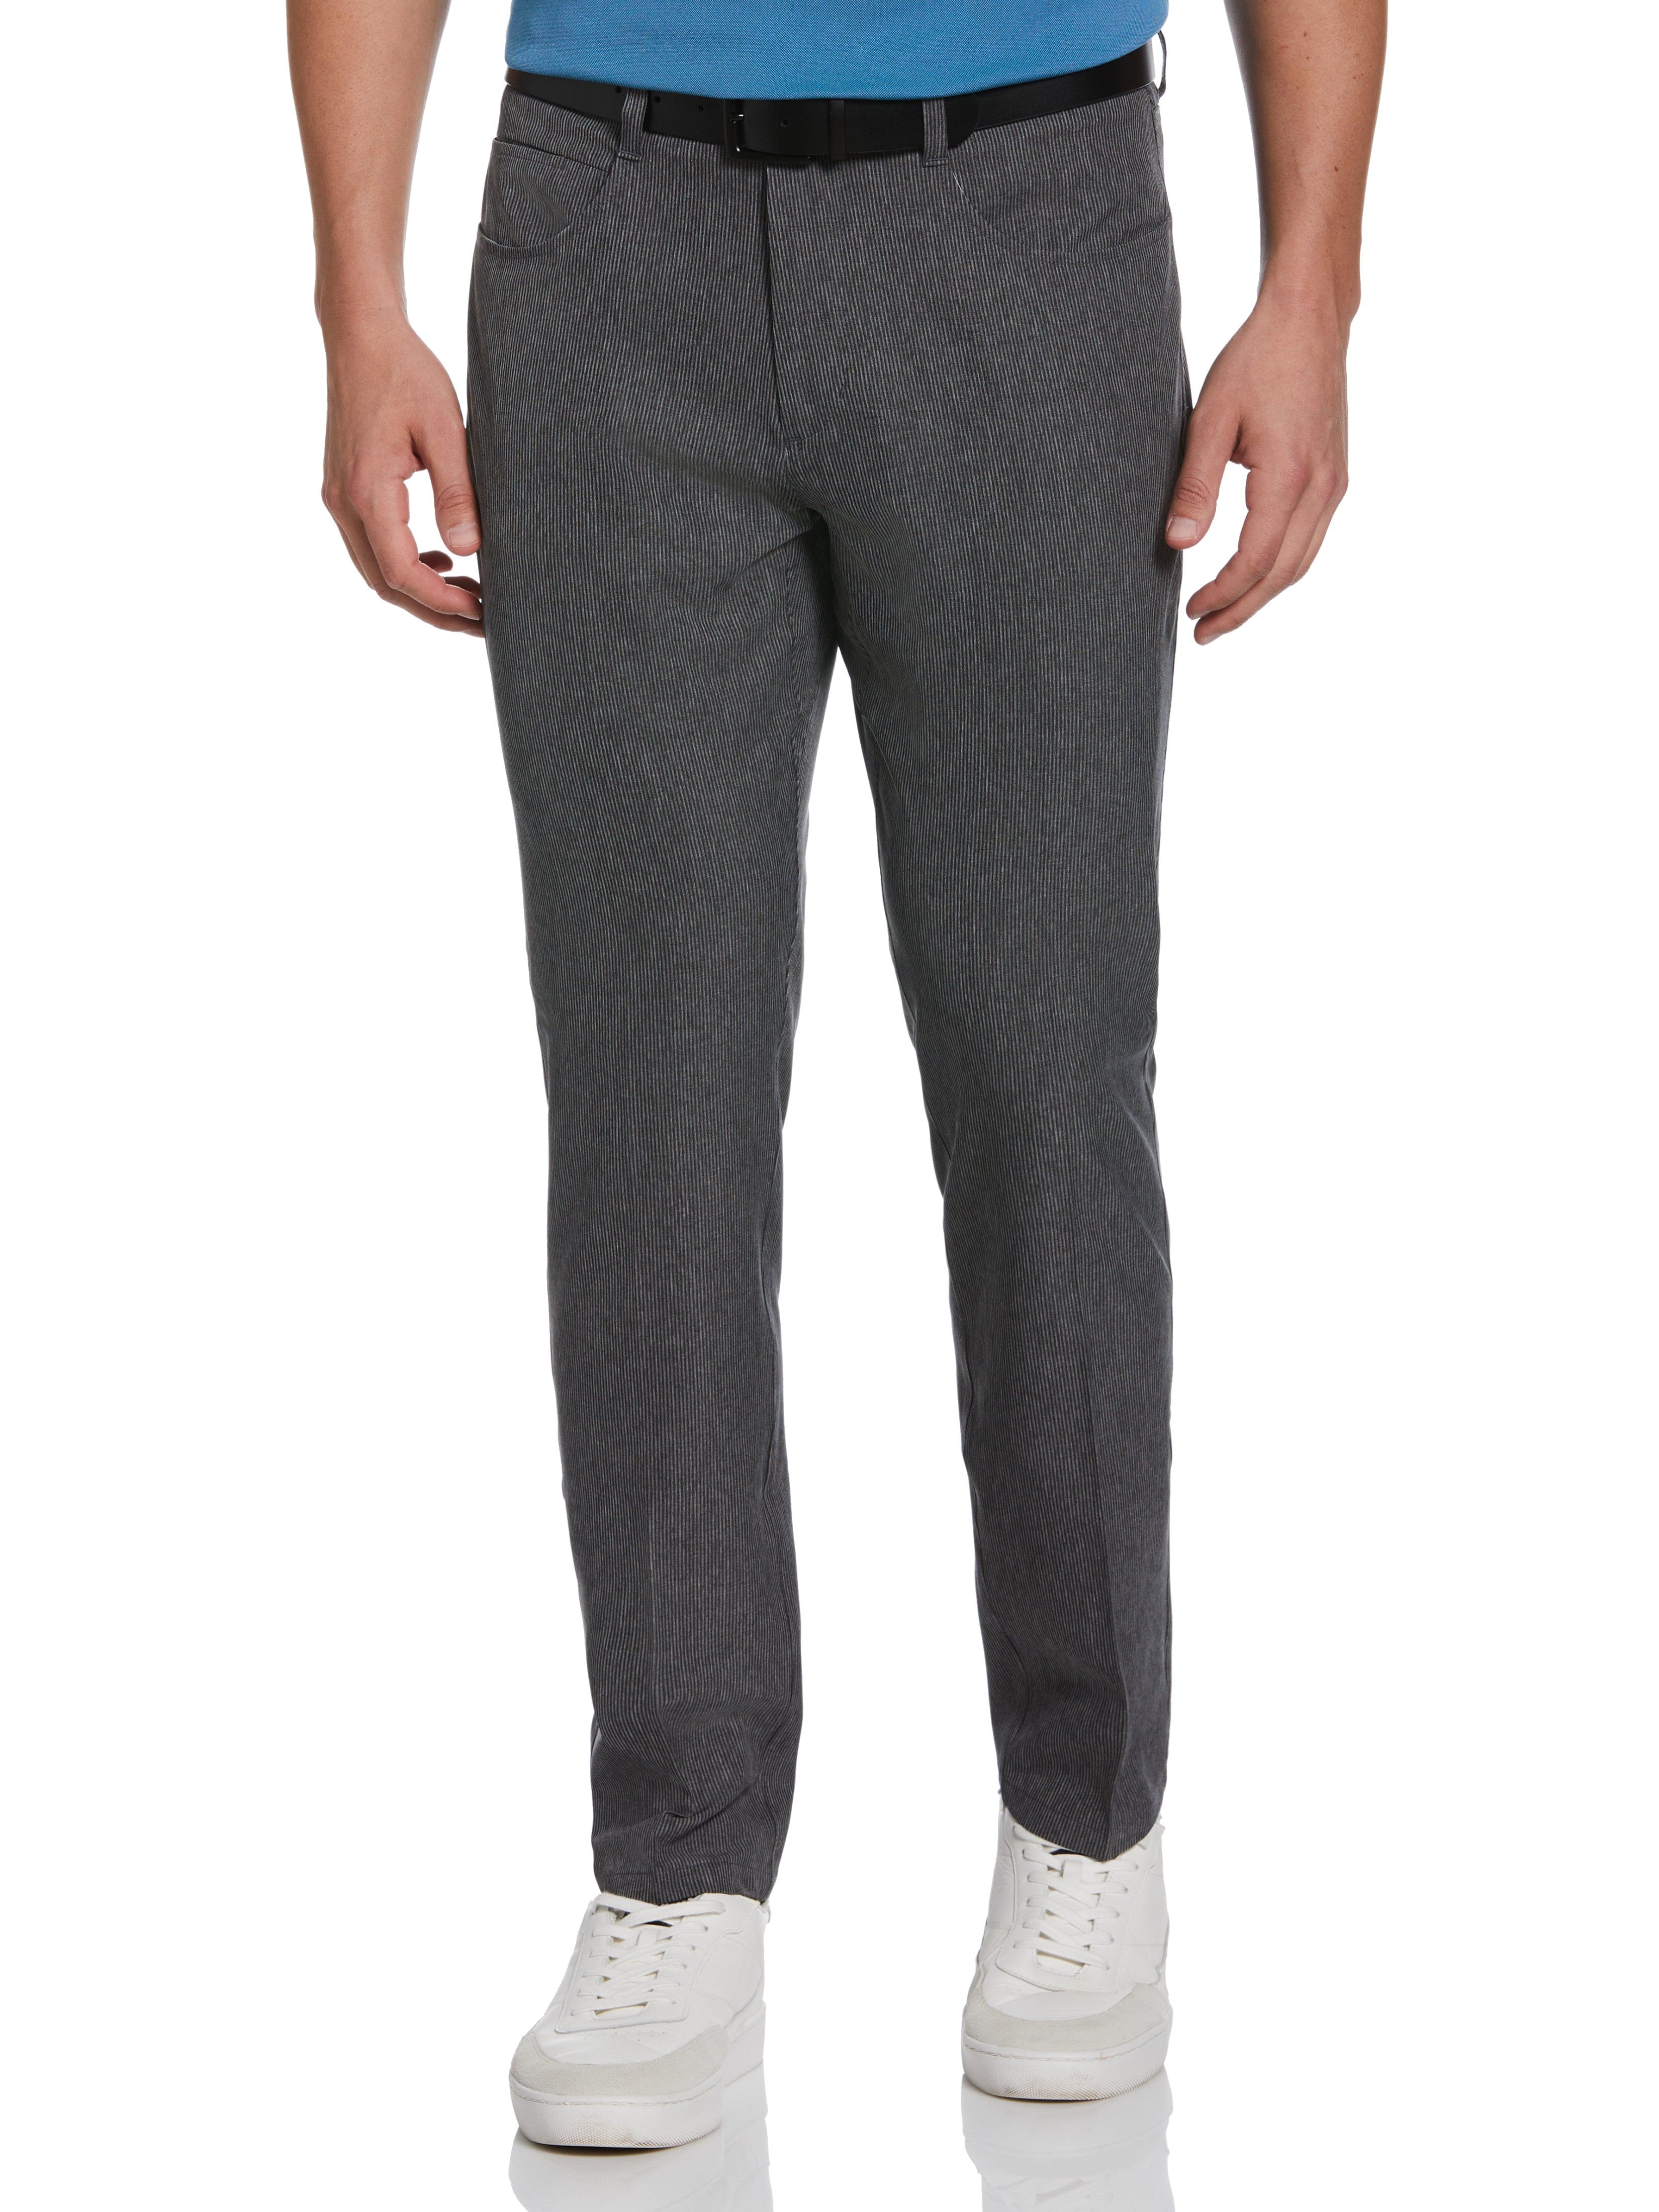 Original Penguin Mens Flat Front Fine Line Print Golf Pants, Size 32 x 32, Black, Polyester/Elastane | Golf Apparel Shop